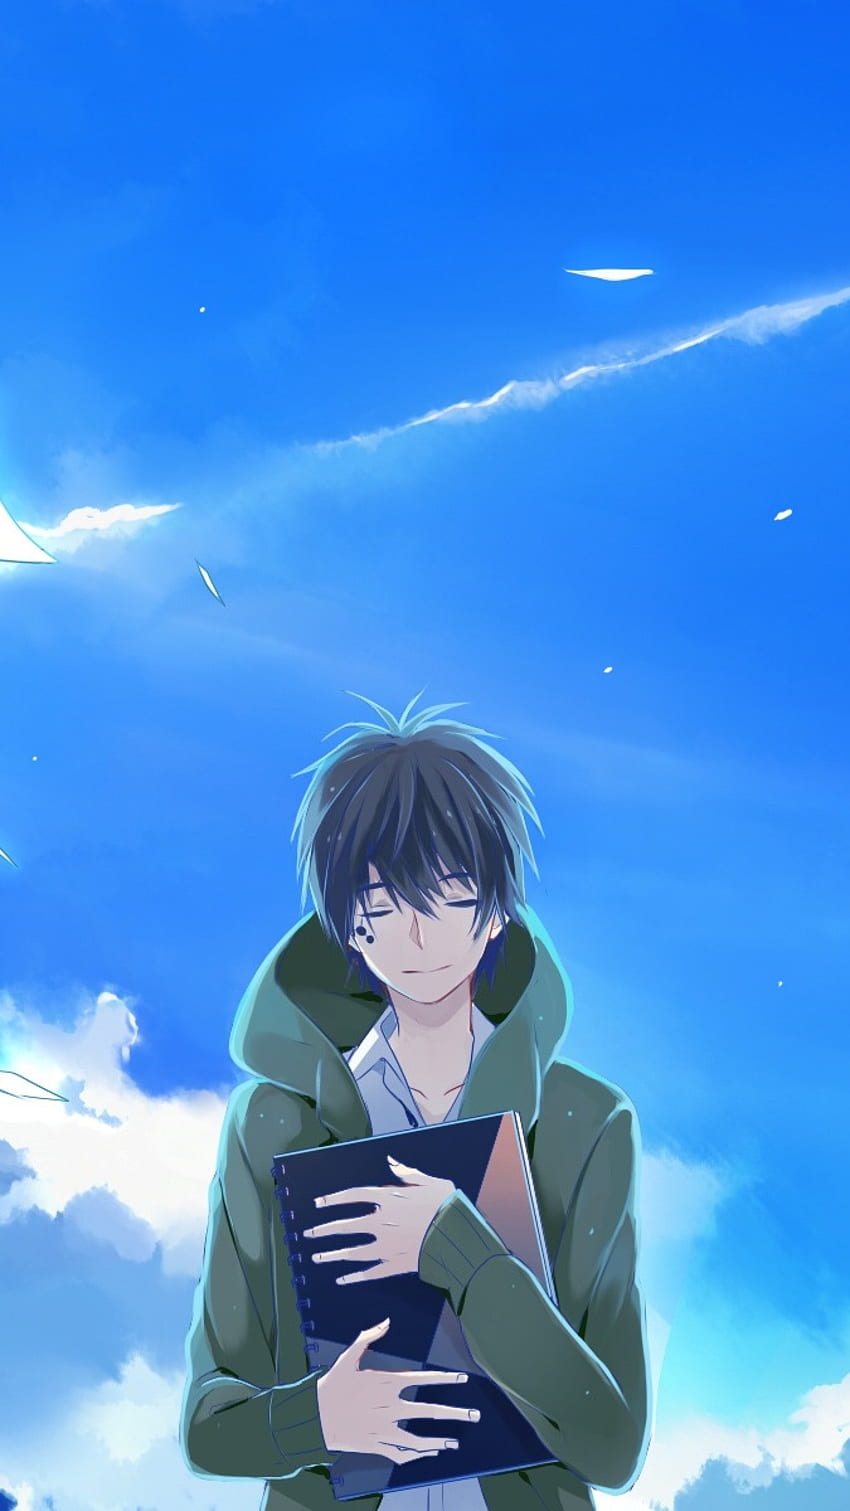 Alone Anime Boy Scenery 4K wallpaper download